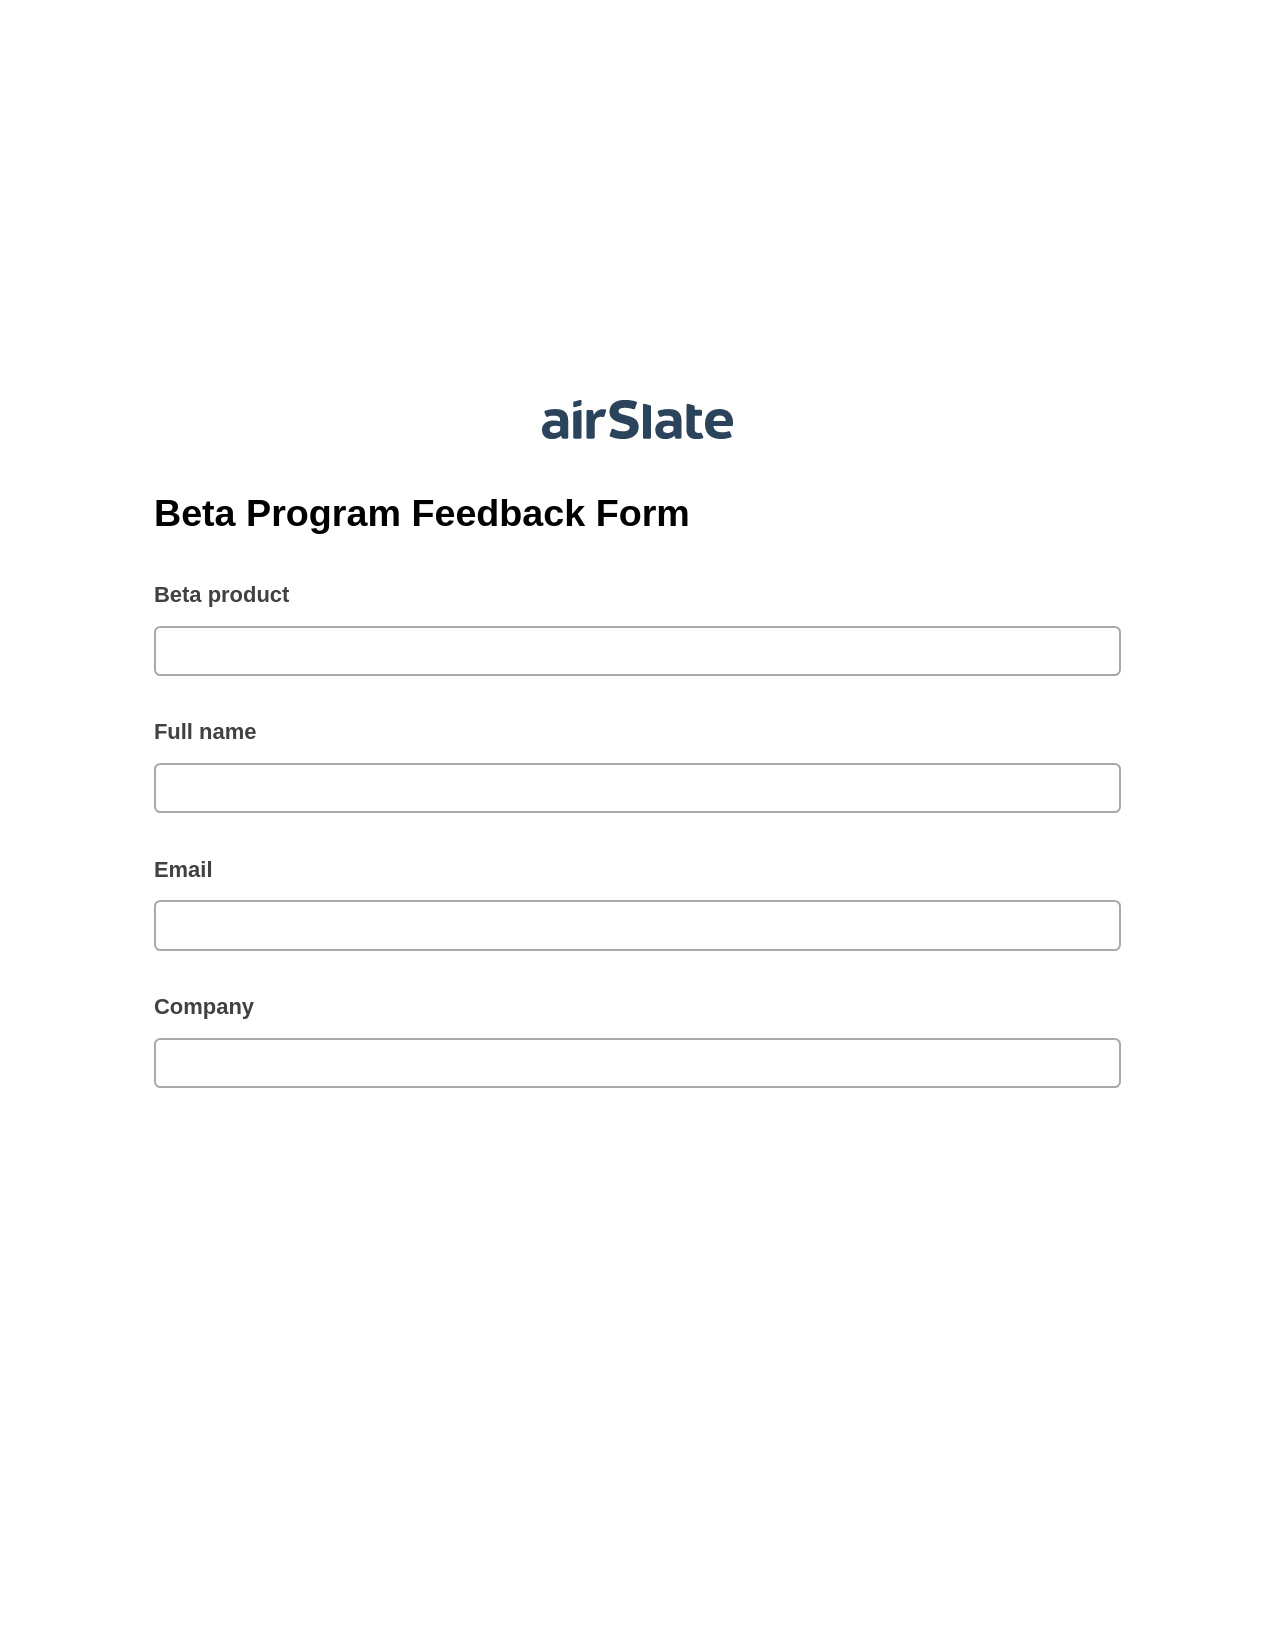 Beta Program Feedback Form Pre-fill from Google Sheets Bot, SendGrid send Campaign bot, Export to Formstack Documents Bot